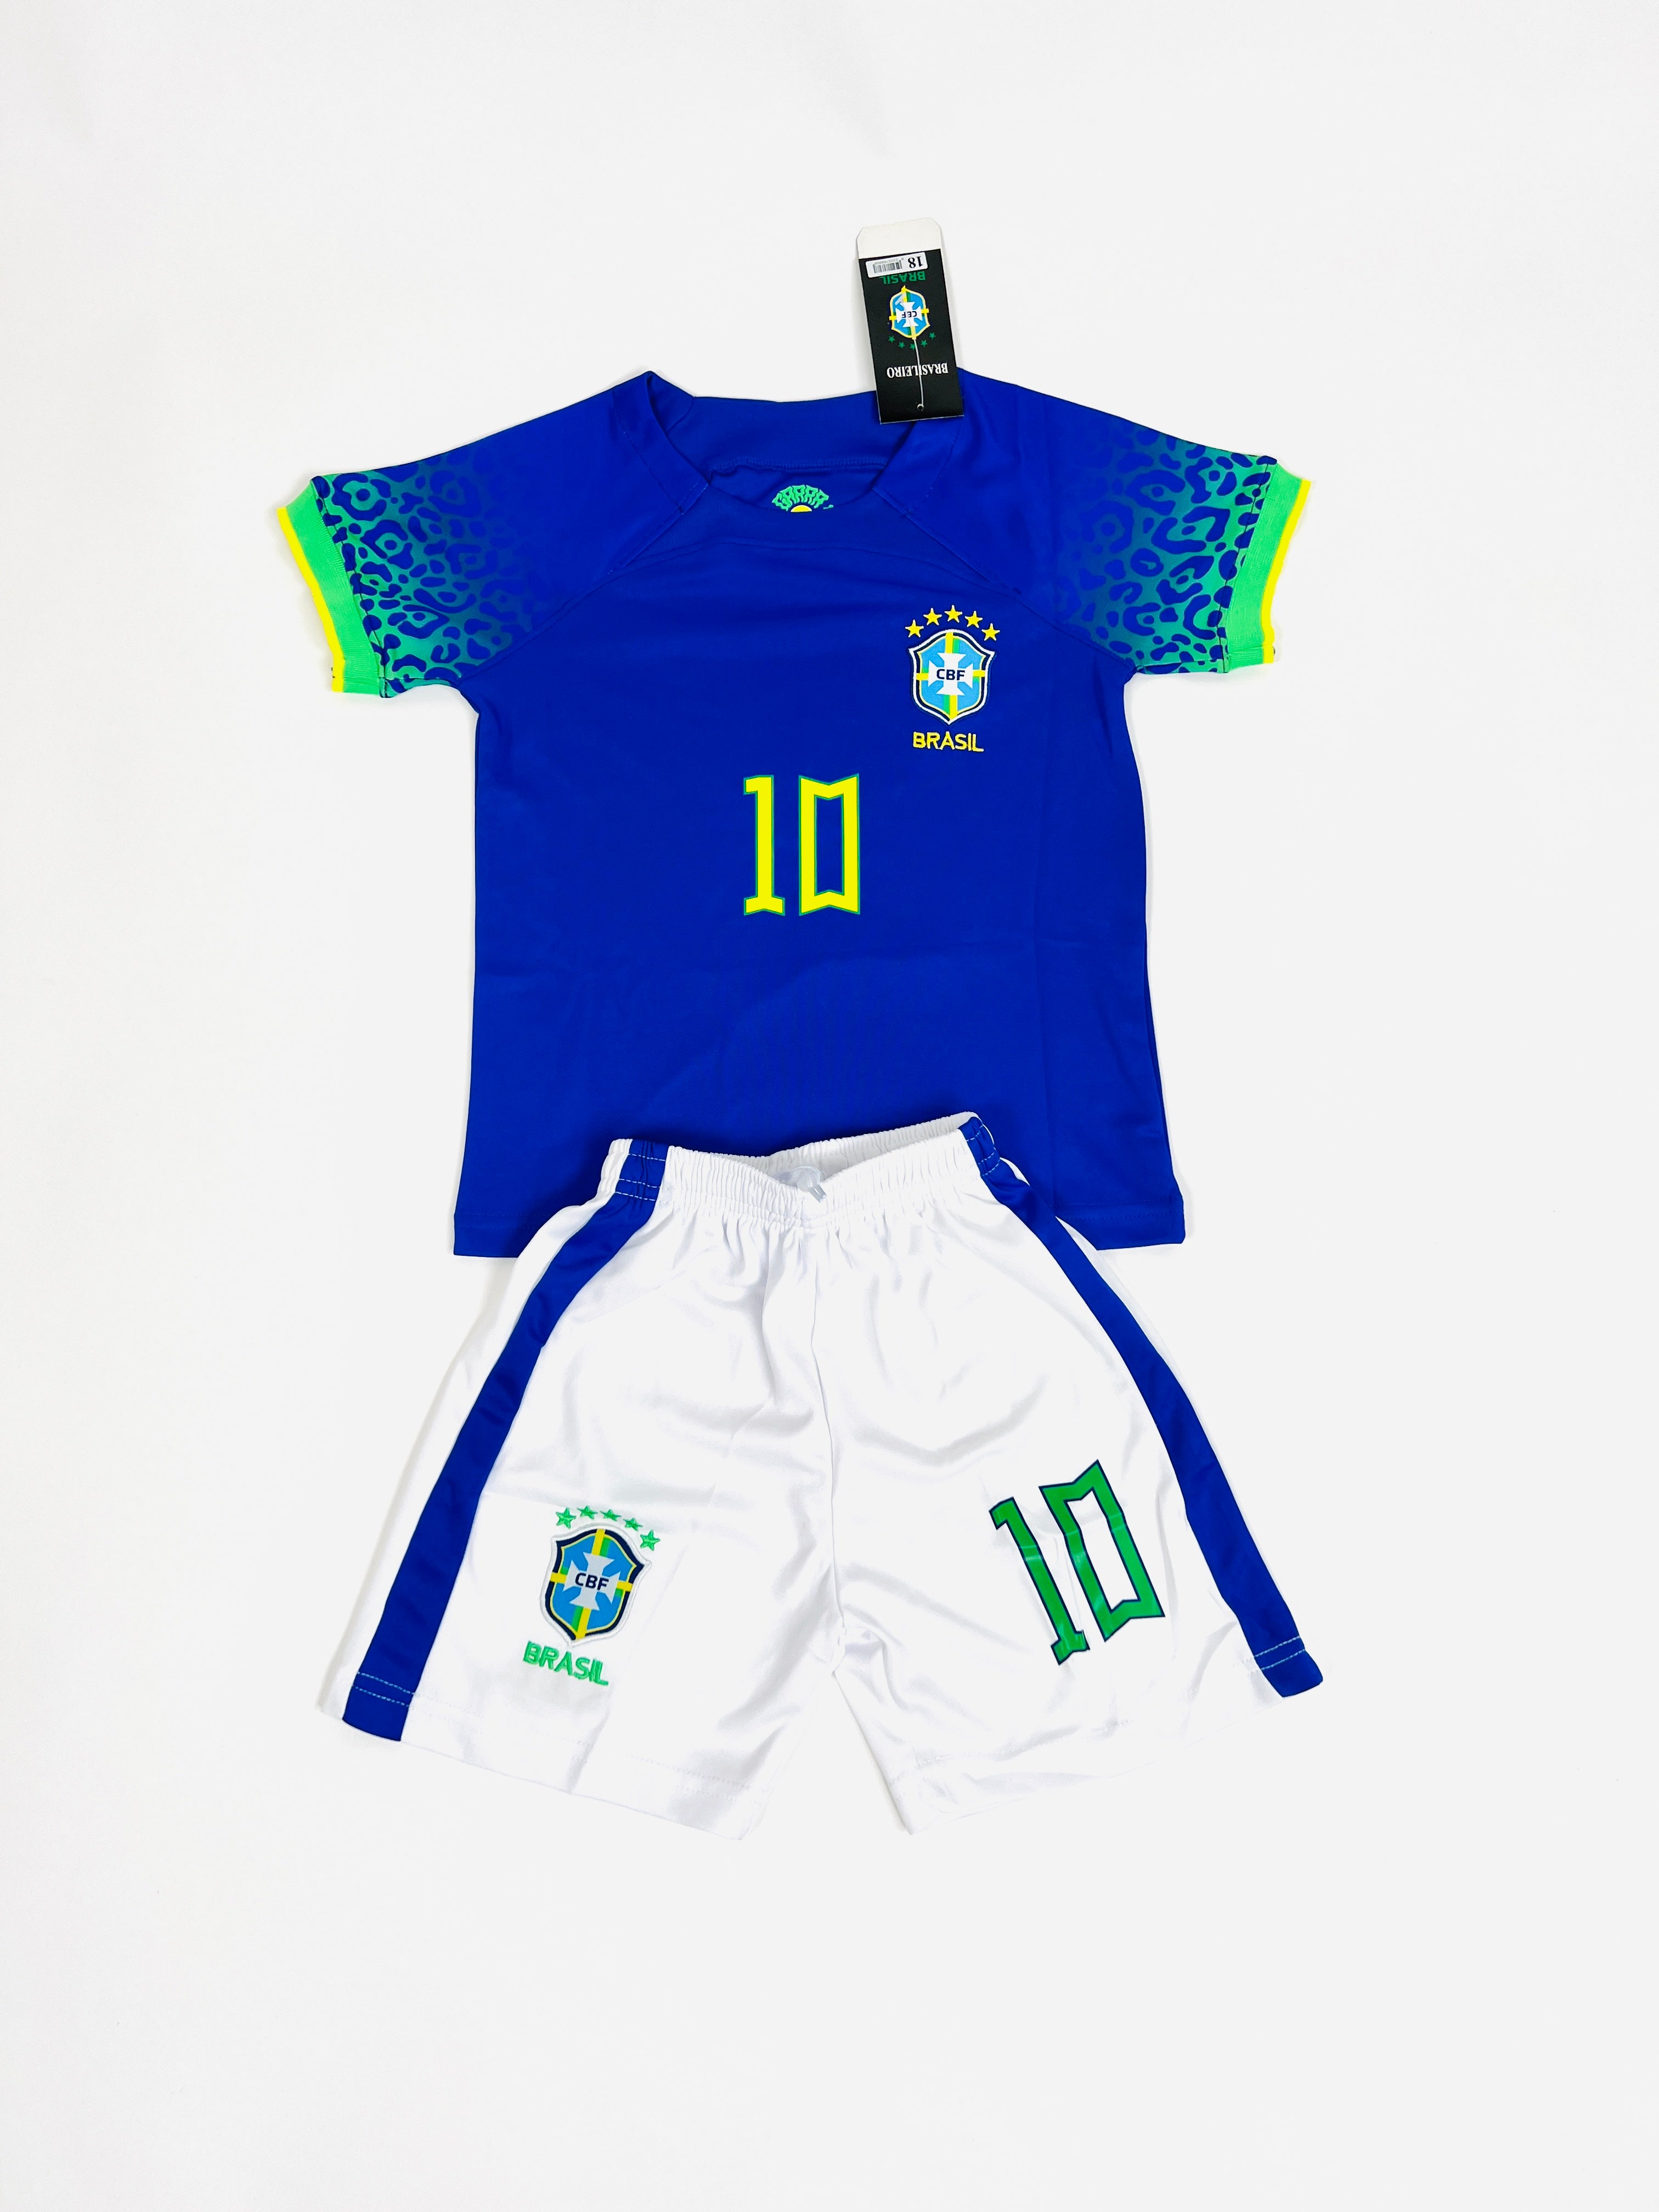 Neymar's soccer journey in Brazil's kit